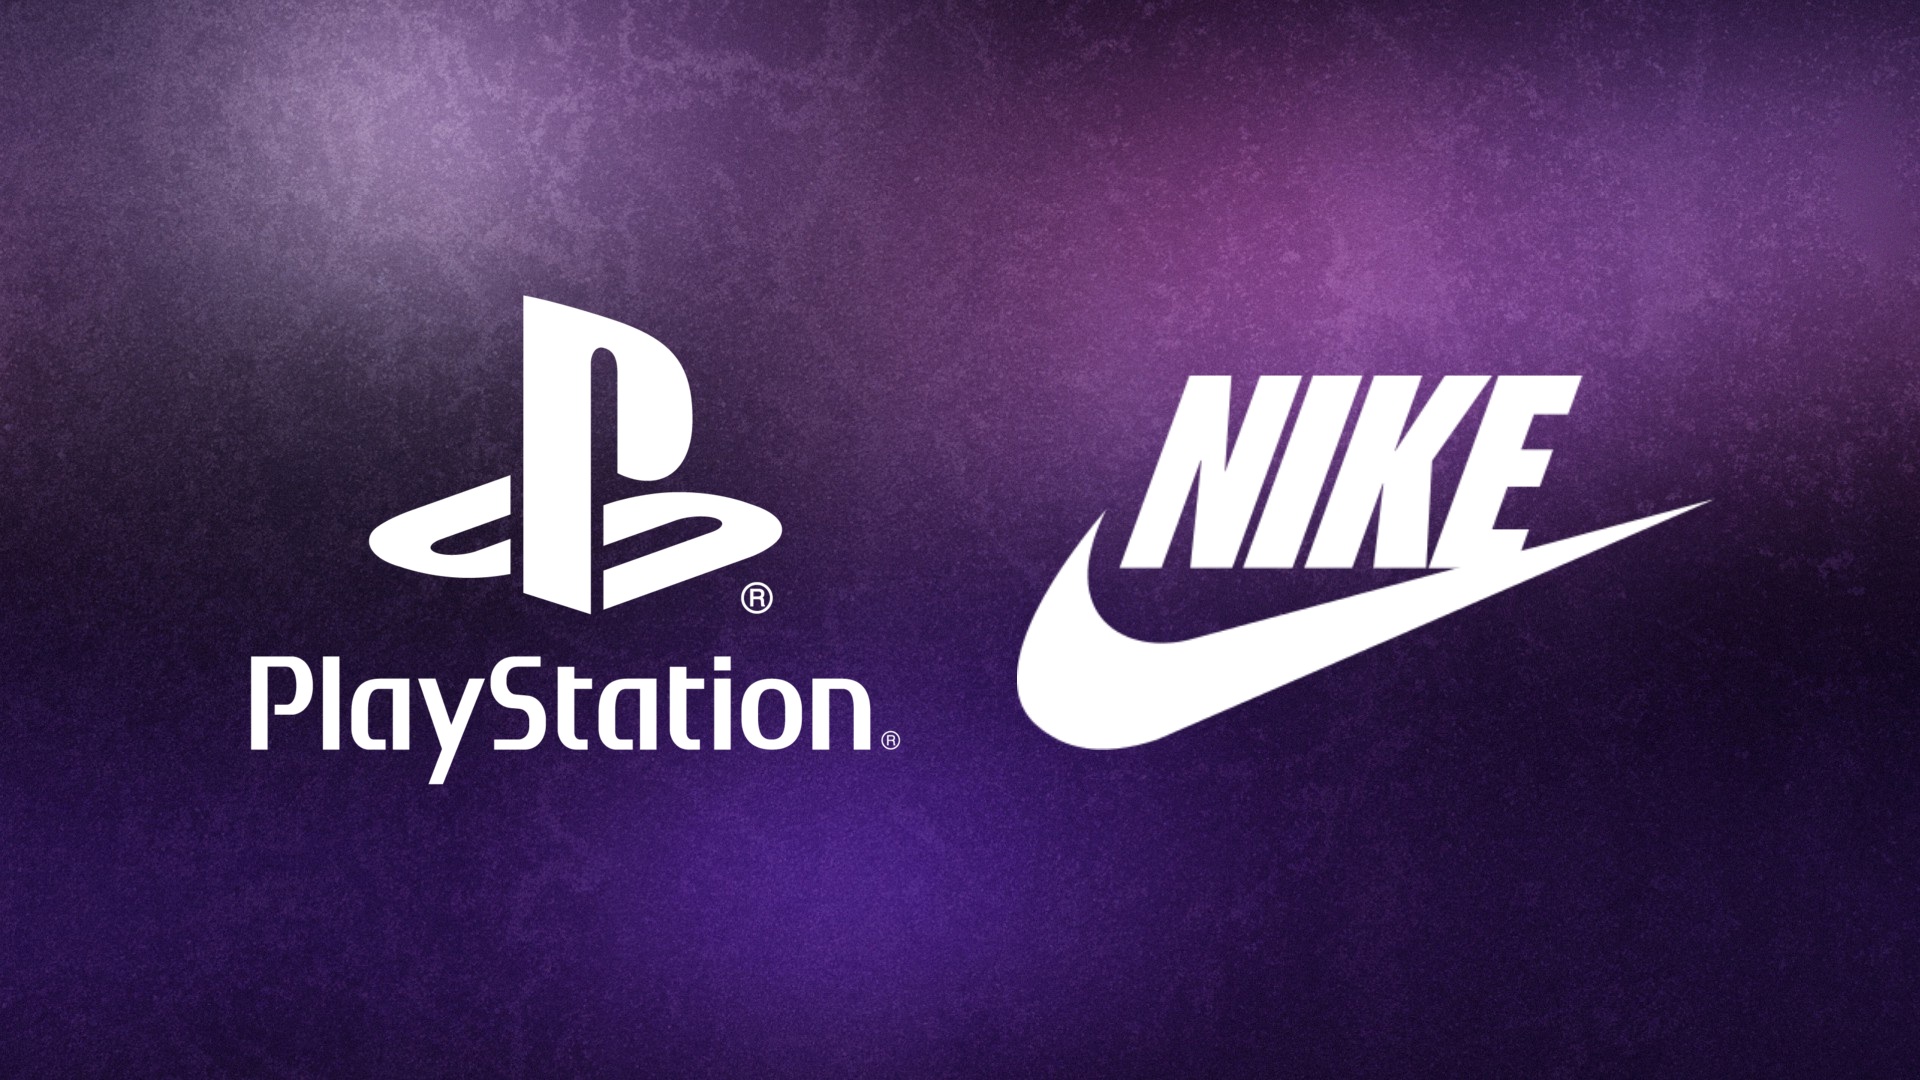 Playstation nike. Nike логотип. Обои на ноут найк. Nike Air Force logo. Статья Nike PLAYSTATION.